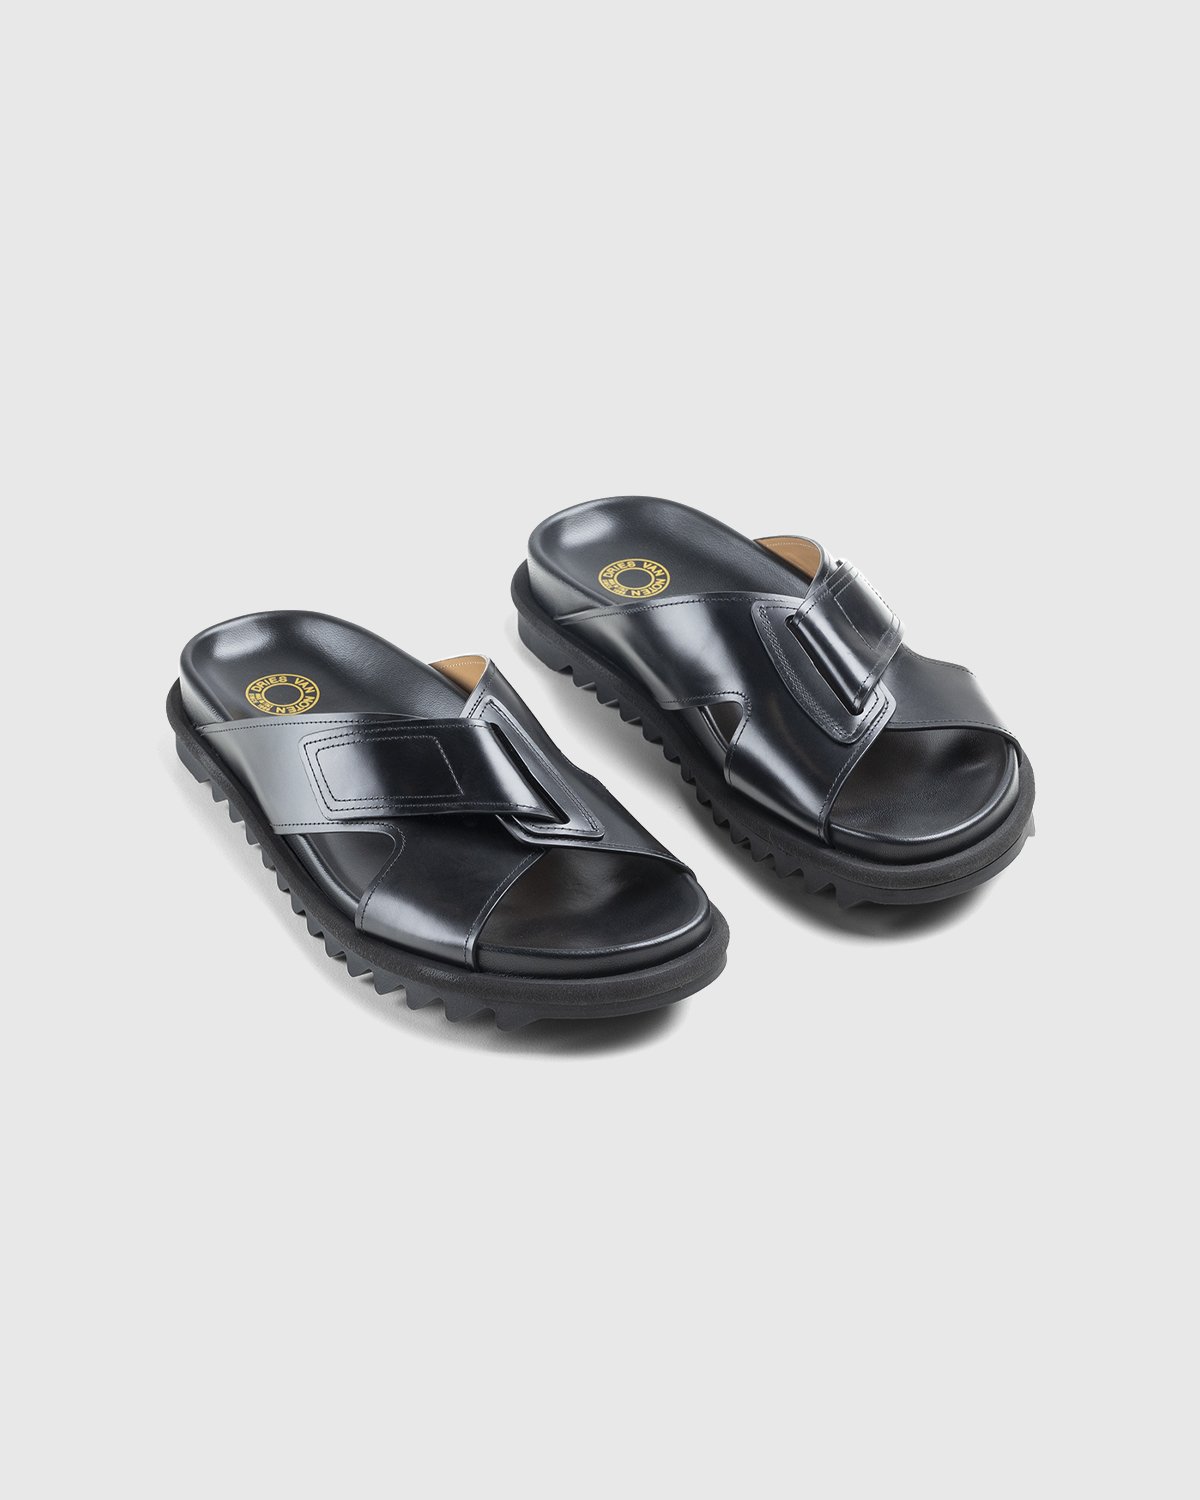 Dries van Noten - Leather Criss-Cross Sandals Black - Footwear - Black - Image 3